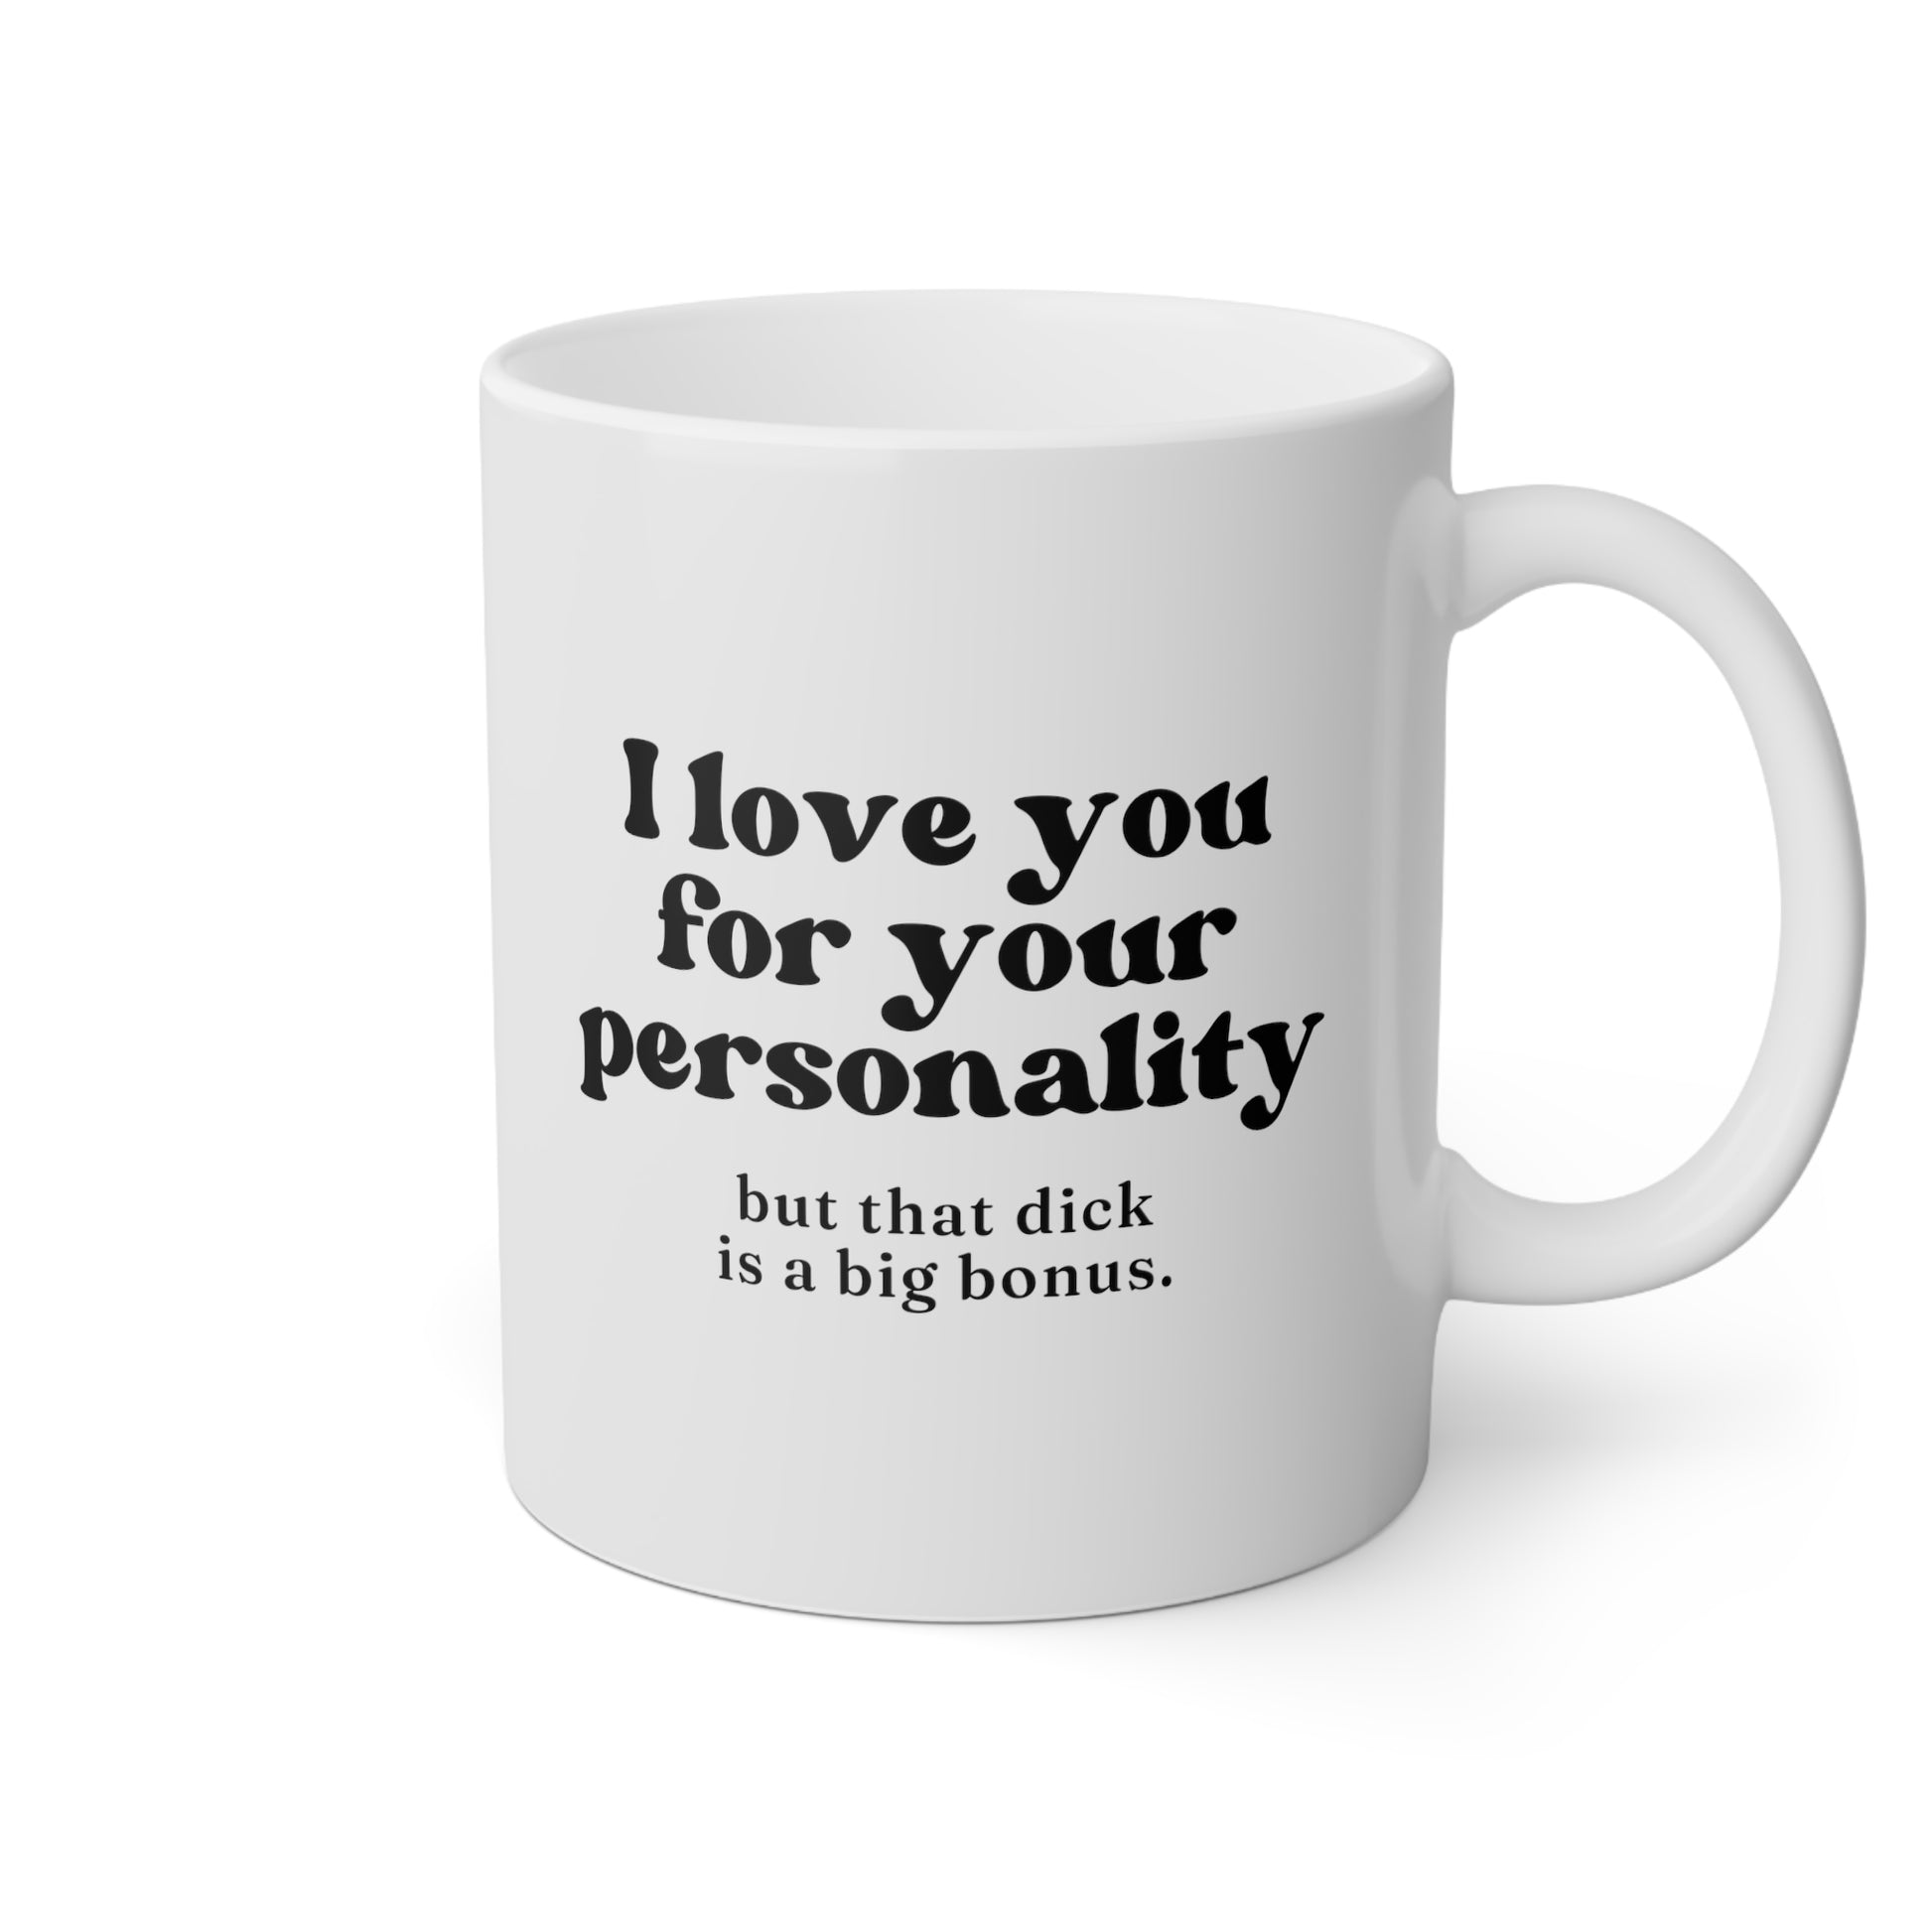 i love you for your personality 11oz white funny coffee mug tea cup gift for him boyfriend husband valentines anniversary joke wedding gag gift waveywares wavey wares